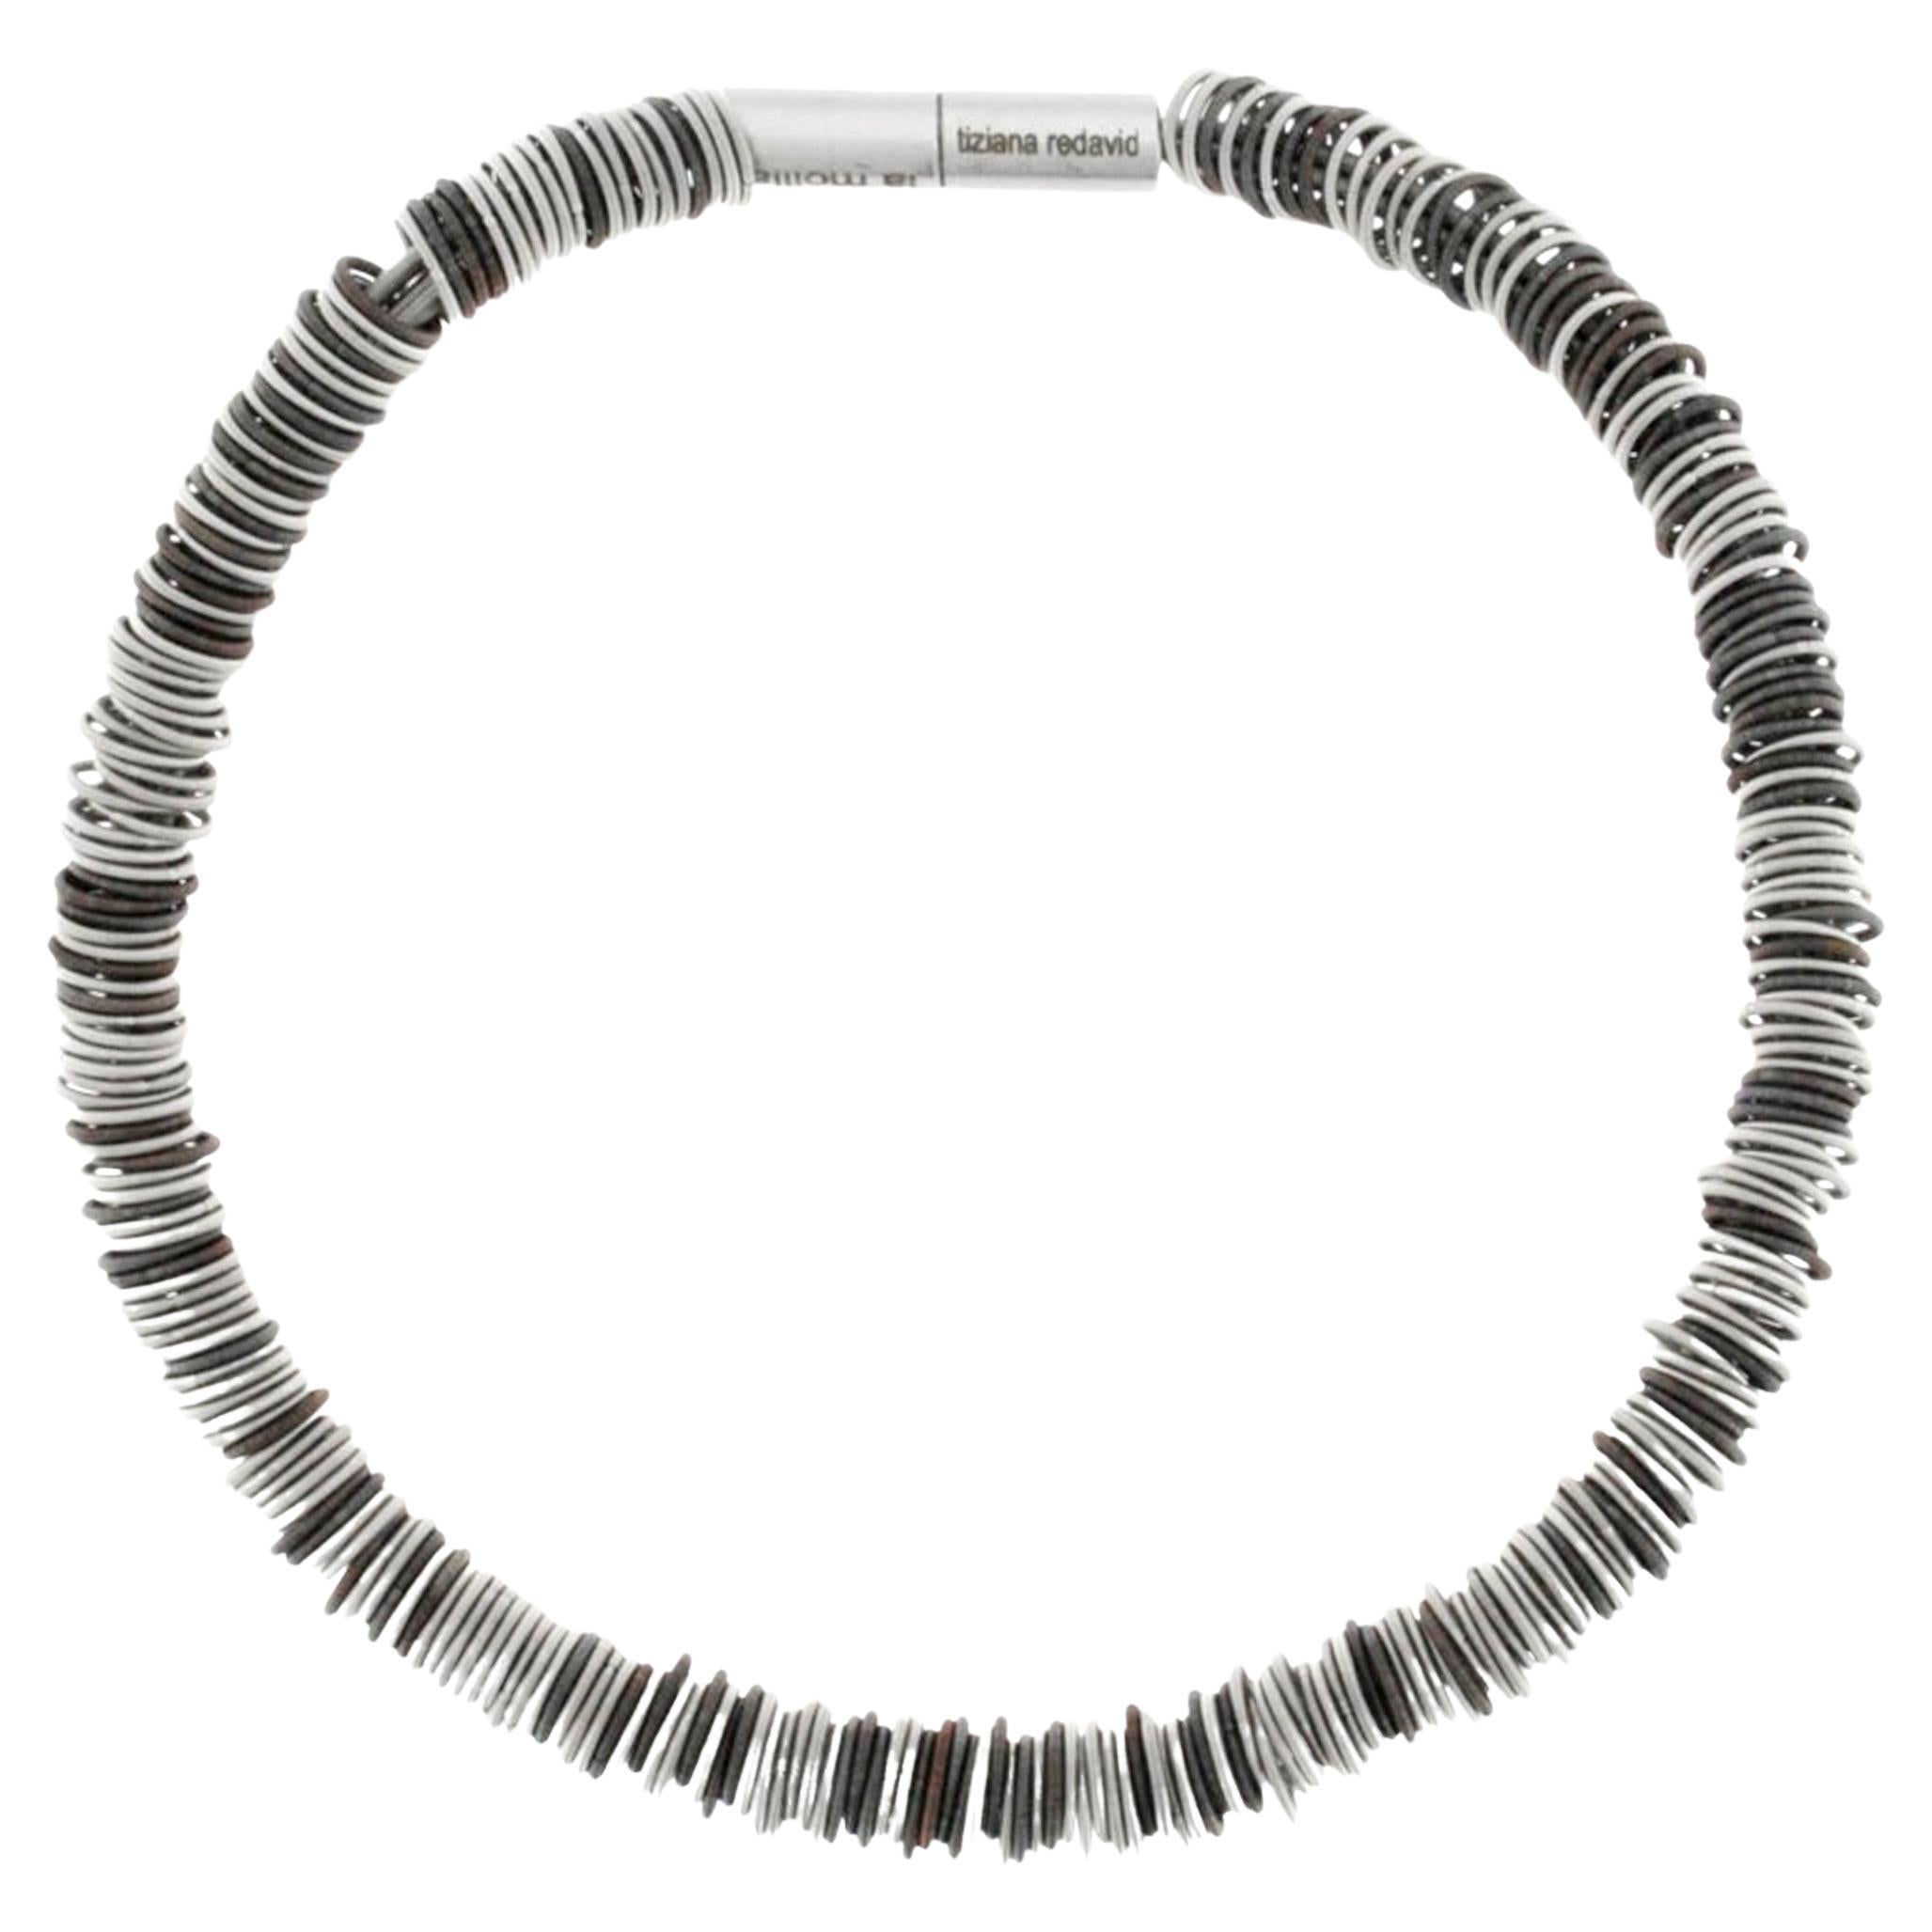 Edelstahl-Spring-Halskette von Jona Tiziana N1